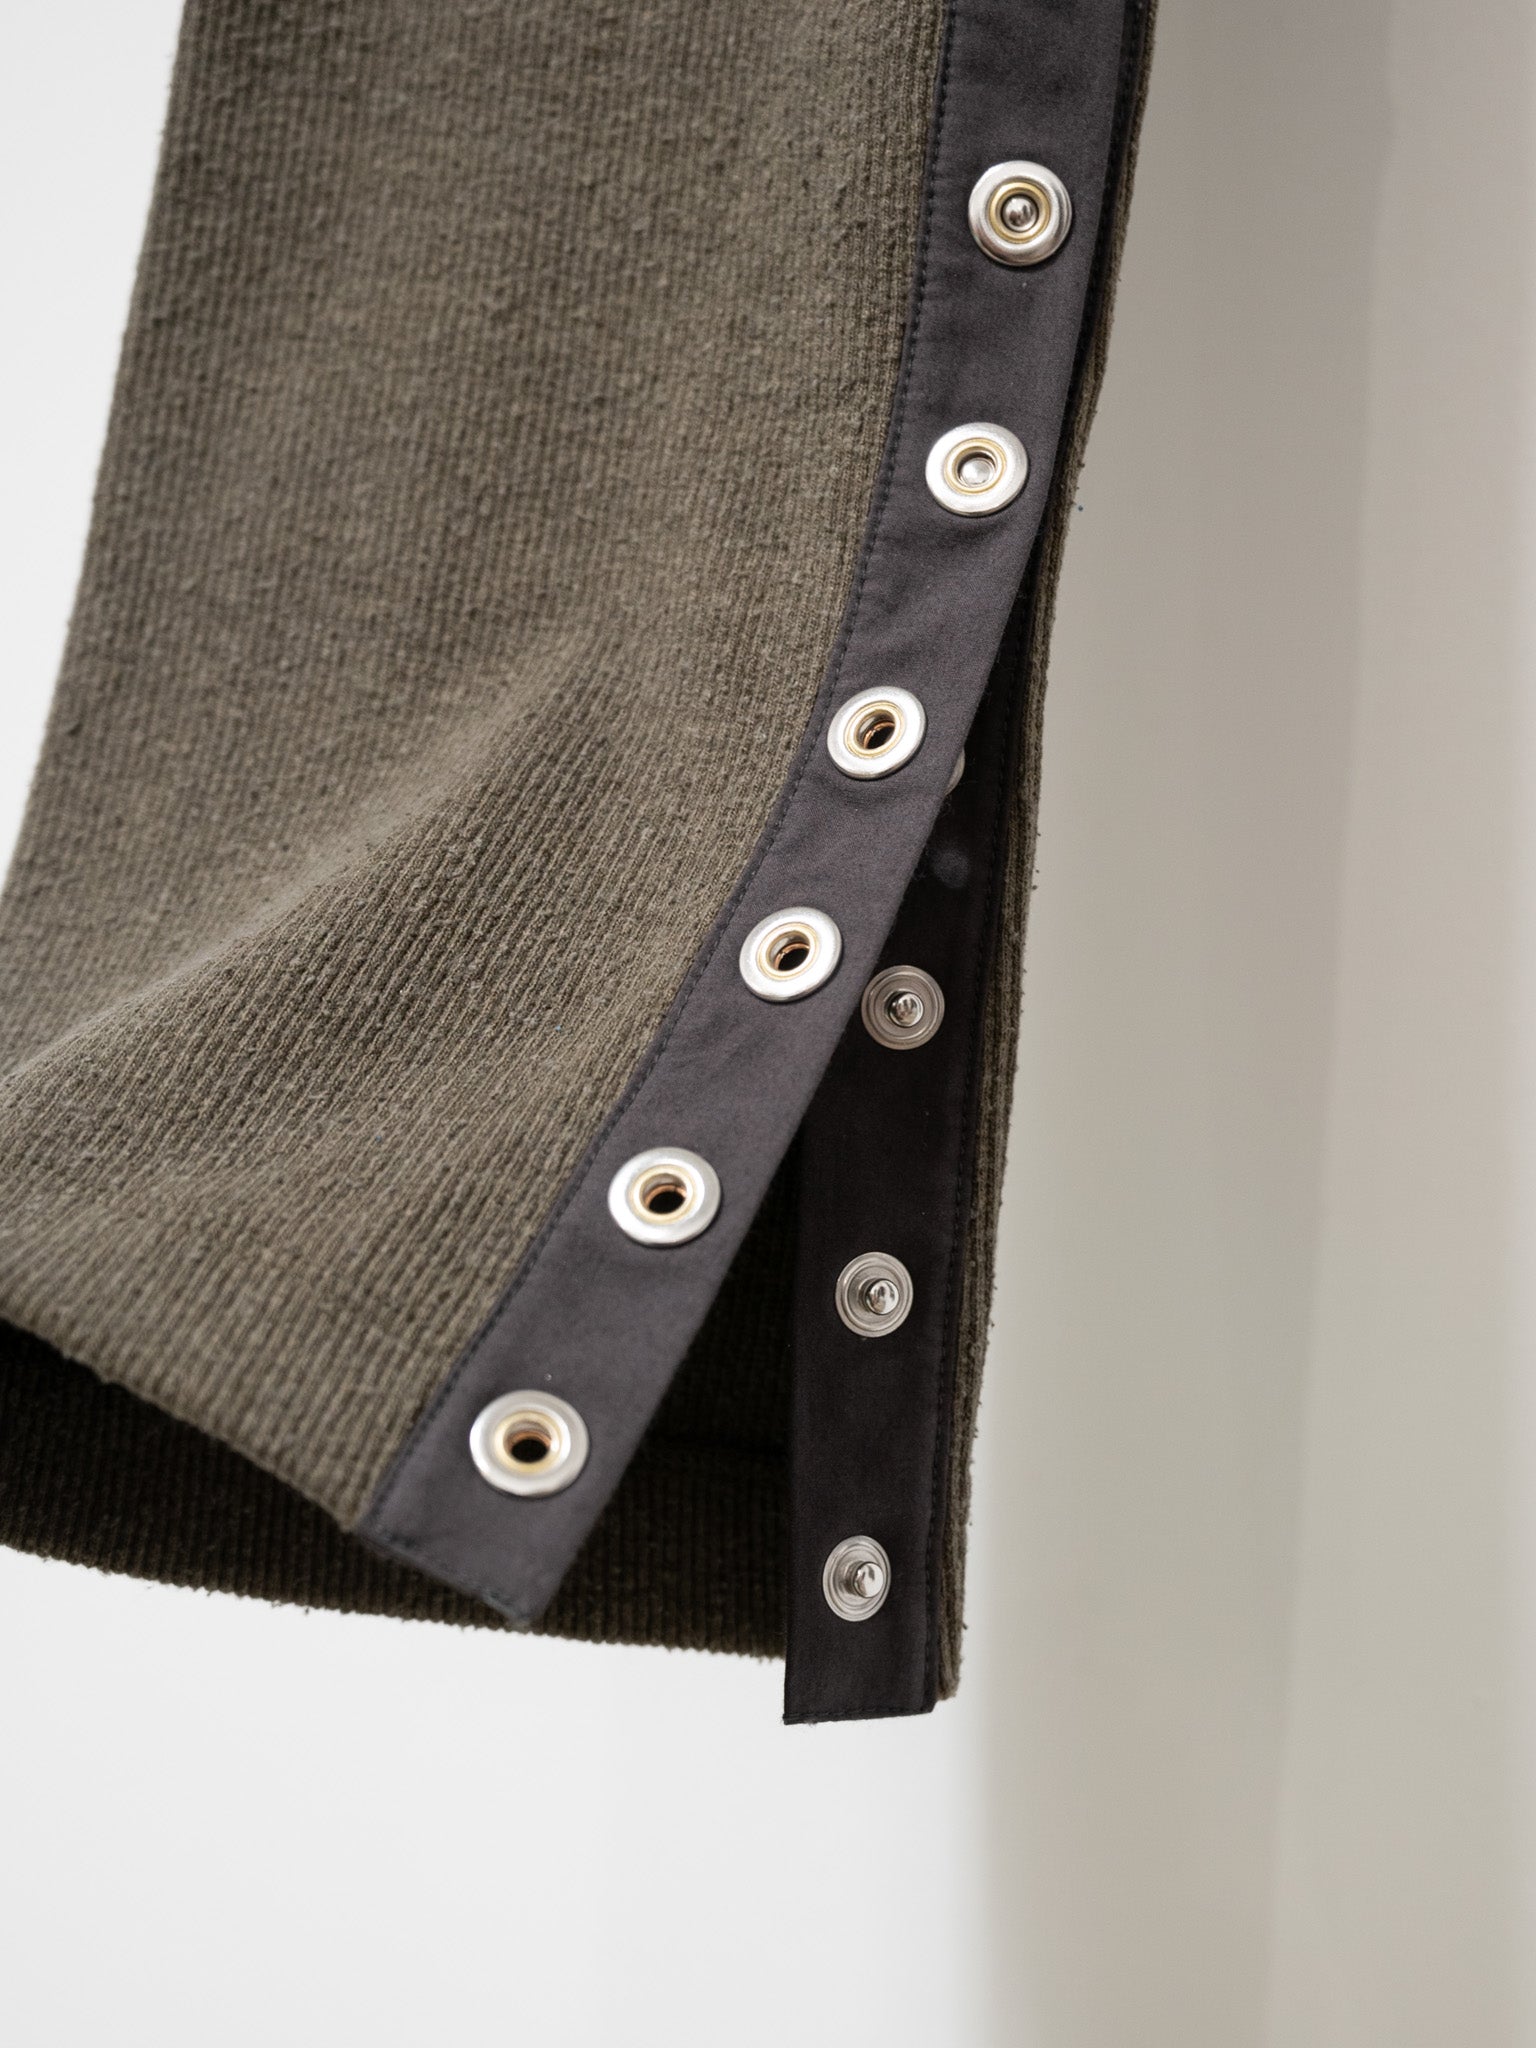 Namu Shop - Unfil Raw Silk Ribbed Jersey Skinny Pants - Dark Taupe